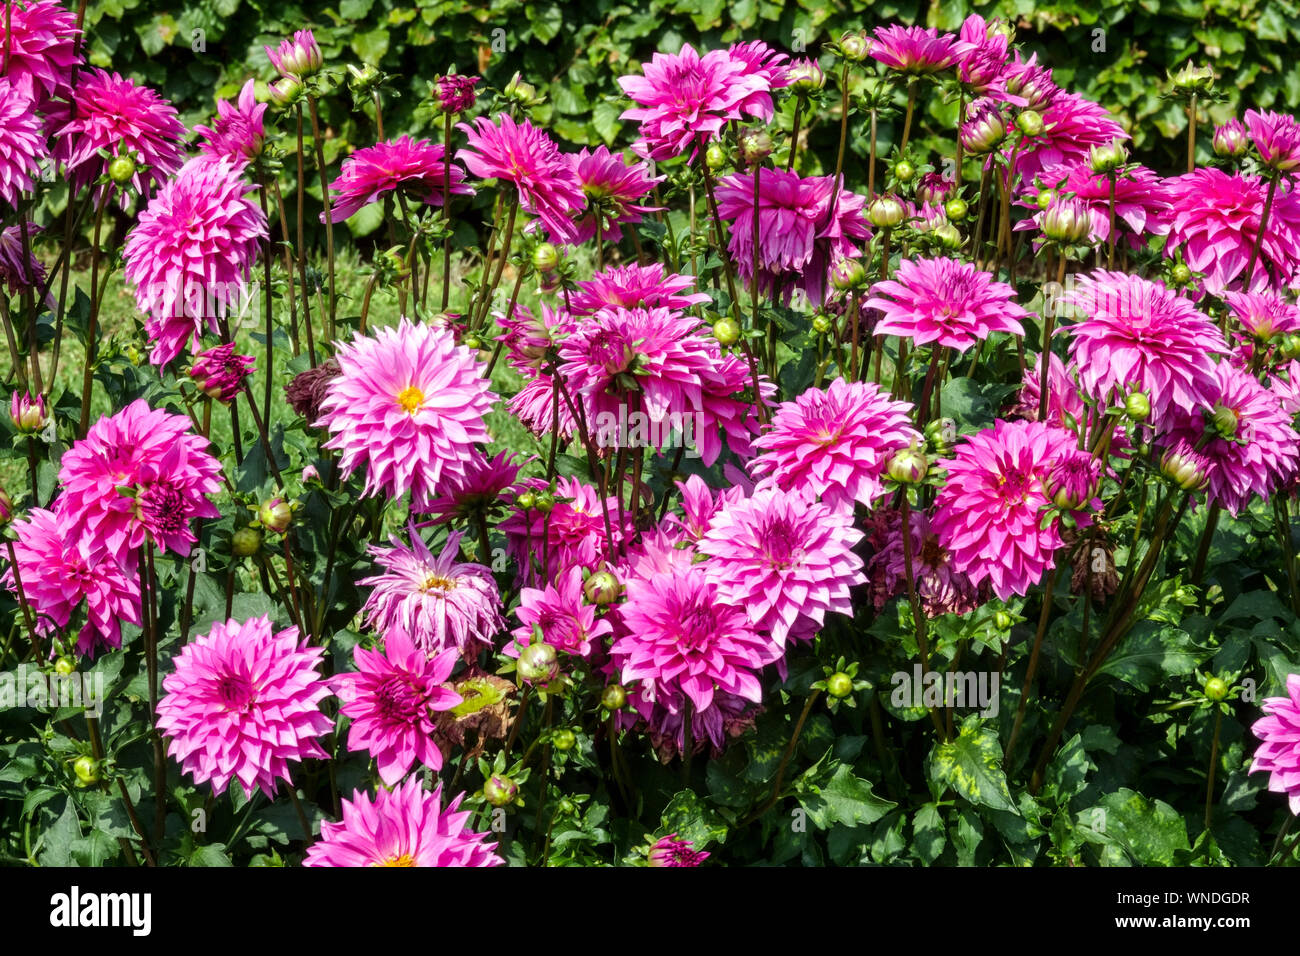 Dahlia flowers garden flower bed border, Dahlia 'Betelgeuse' Pink Dahlias flowerbed bedding dahlias Stock Photo